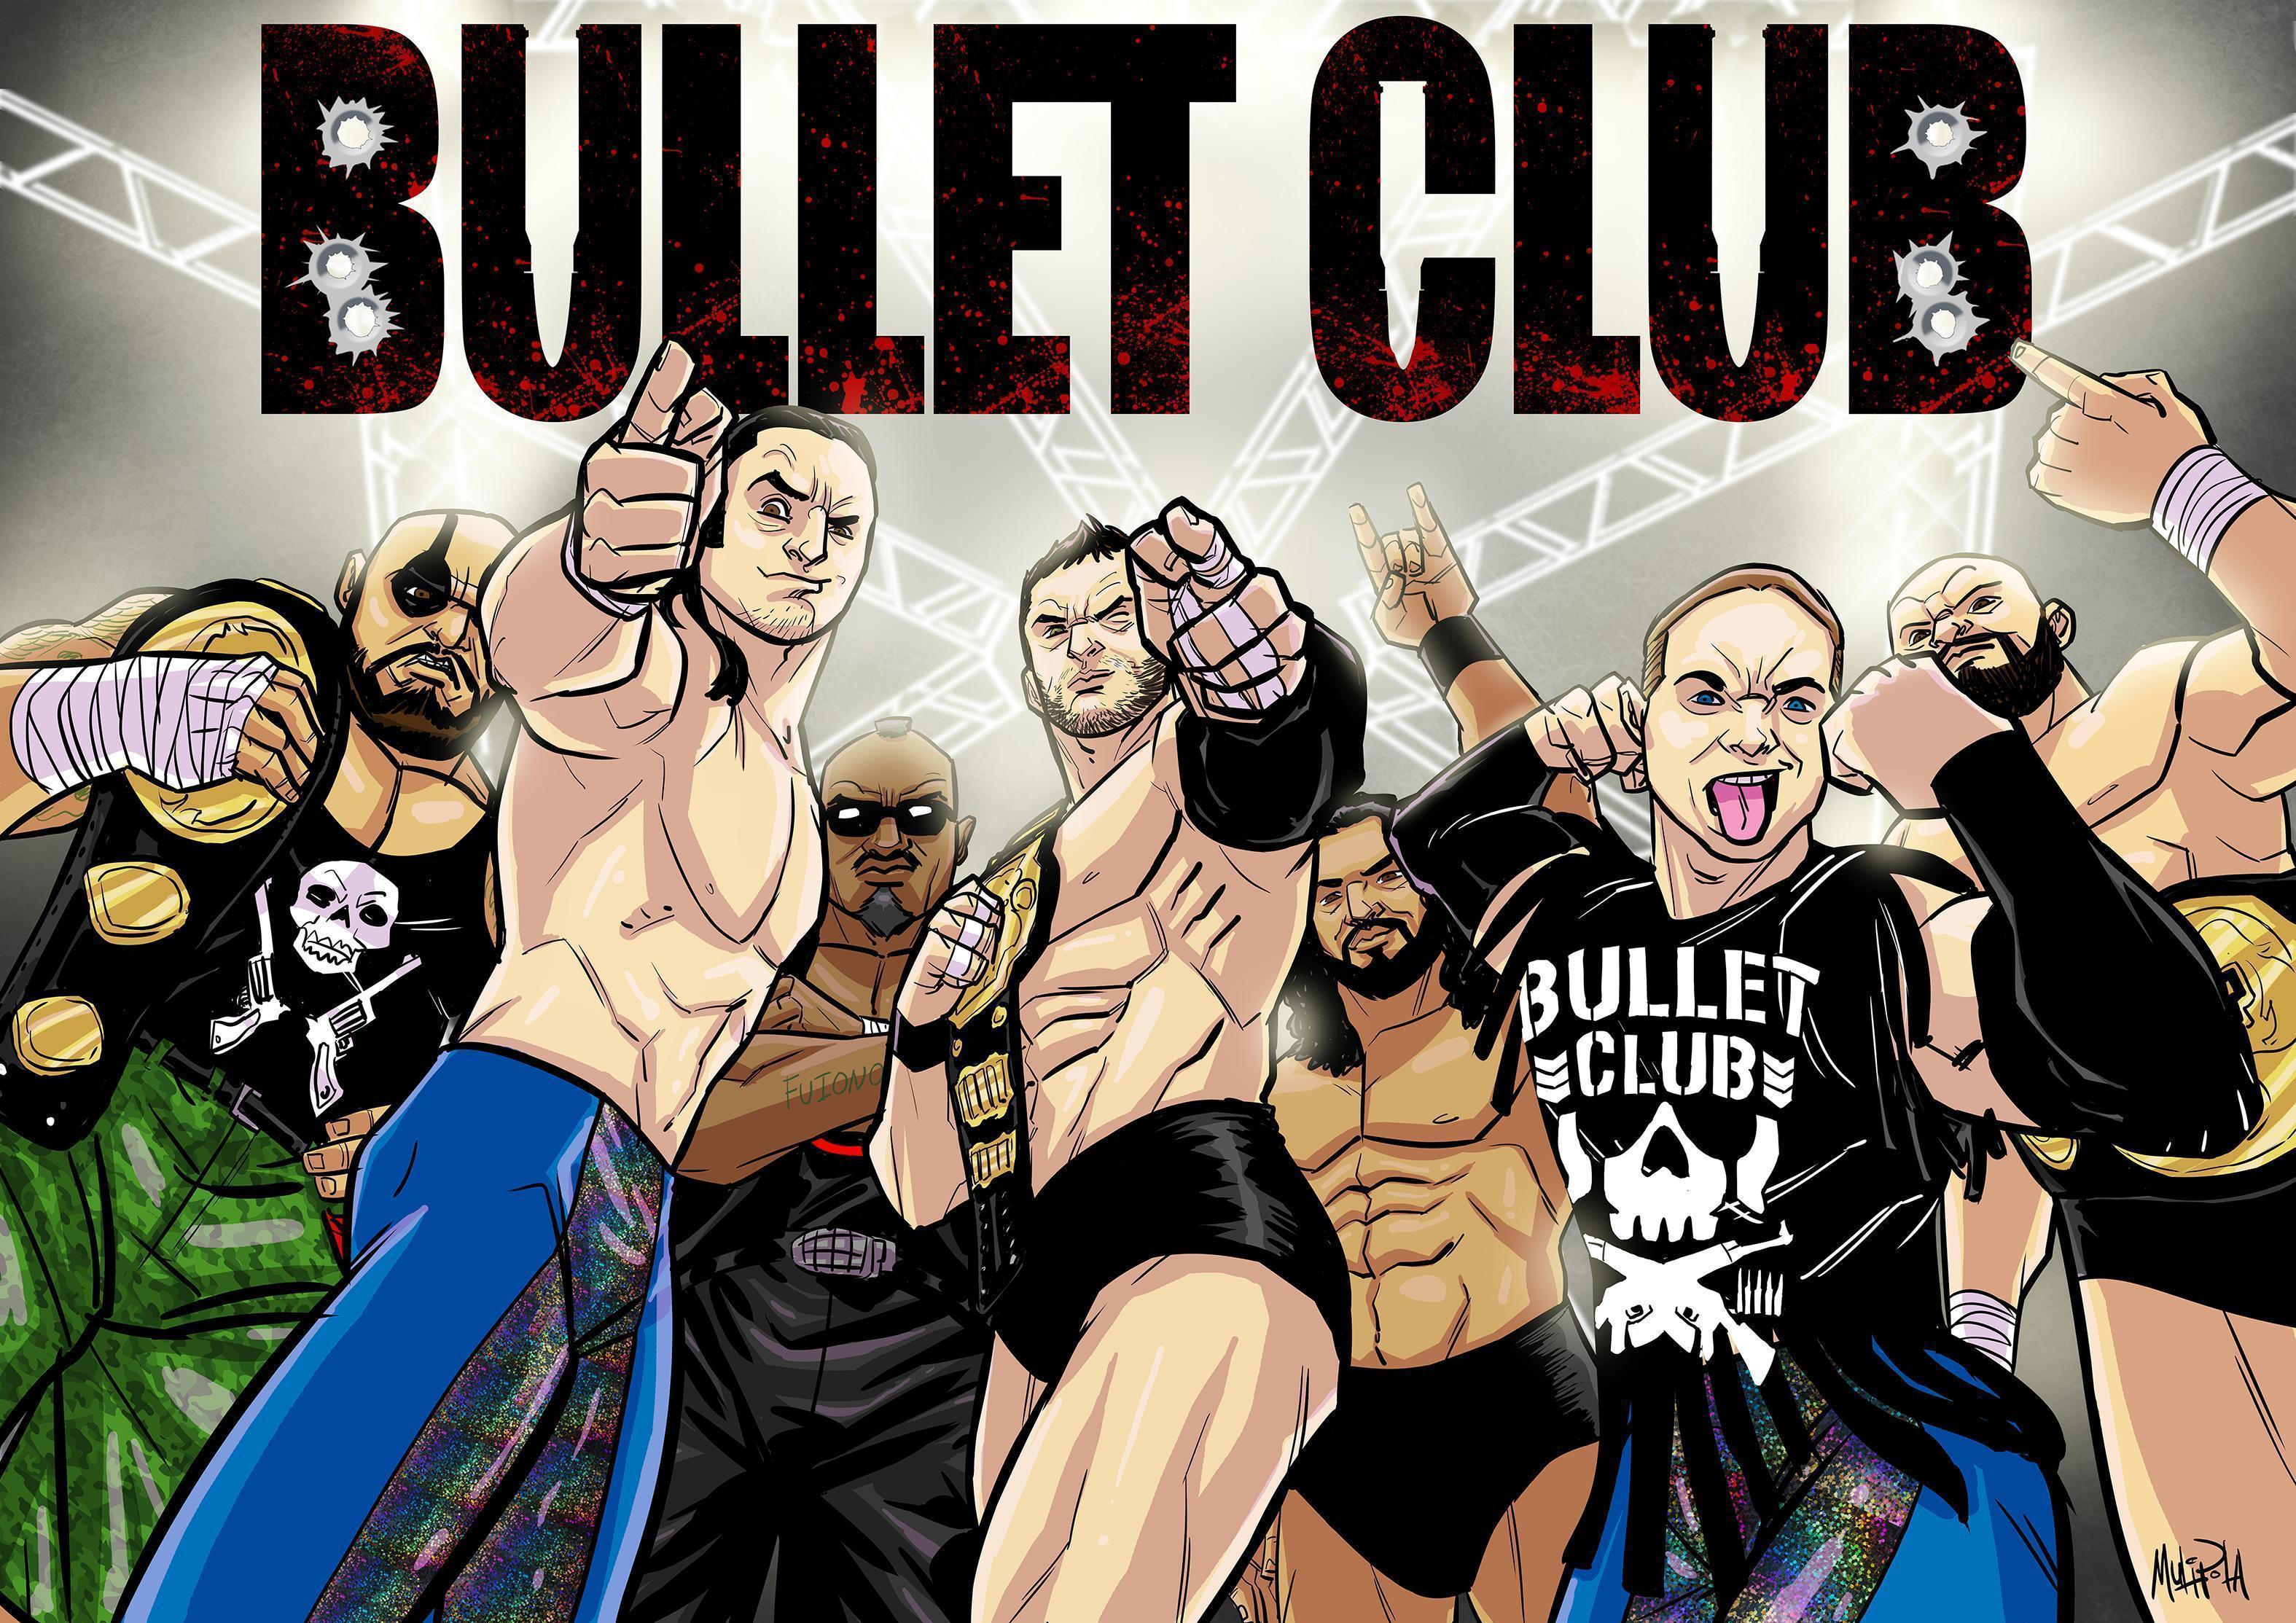 Bullet Club Wallpaper